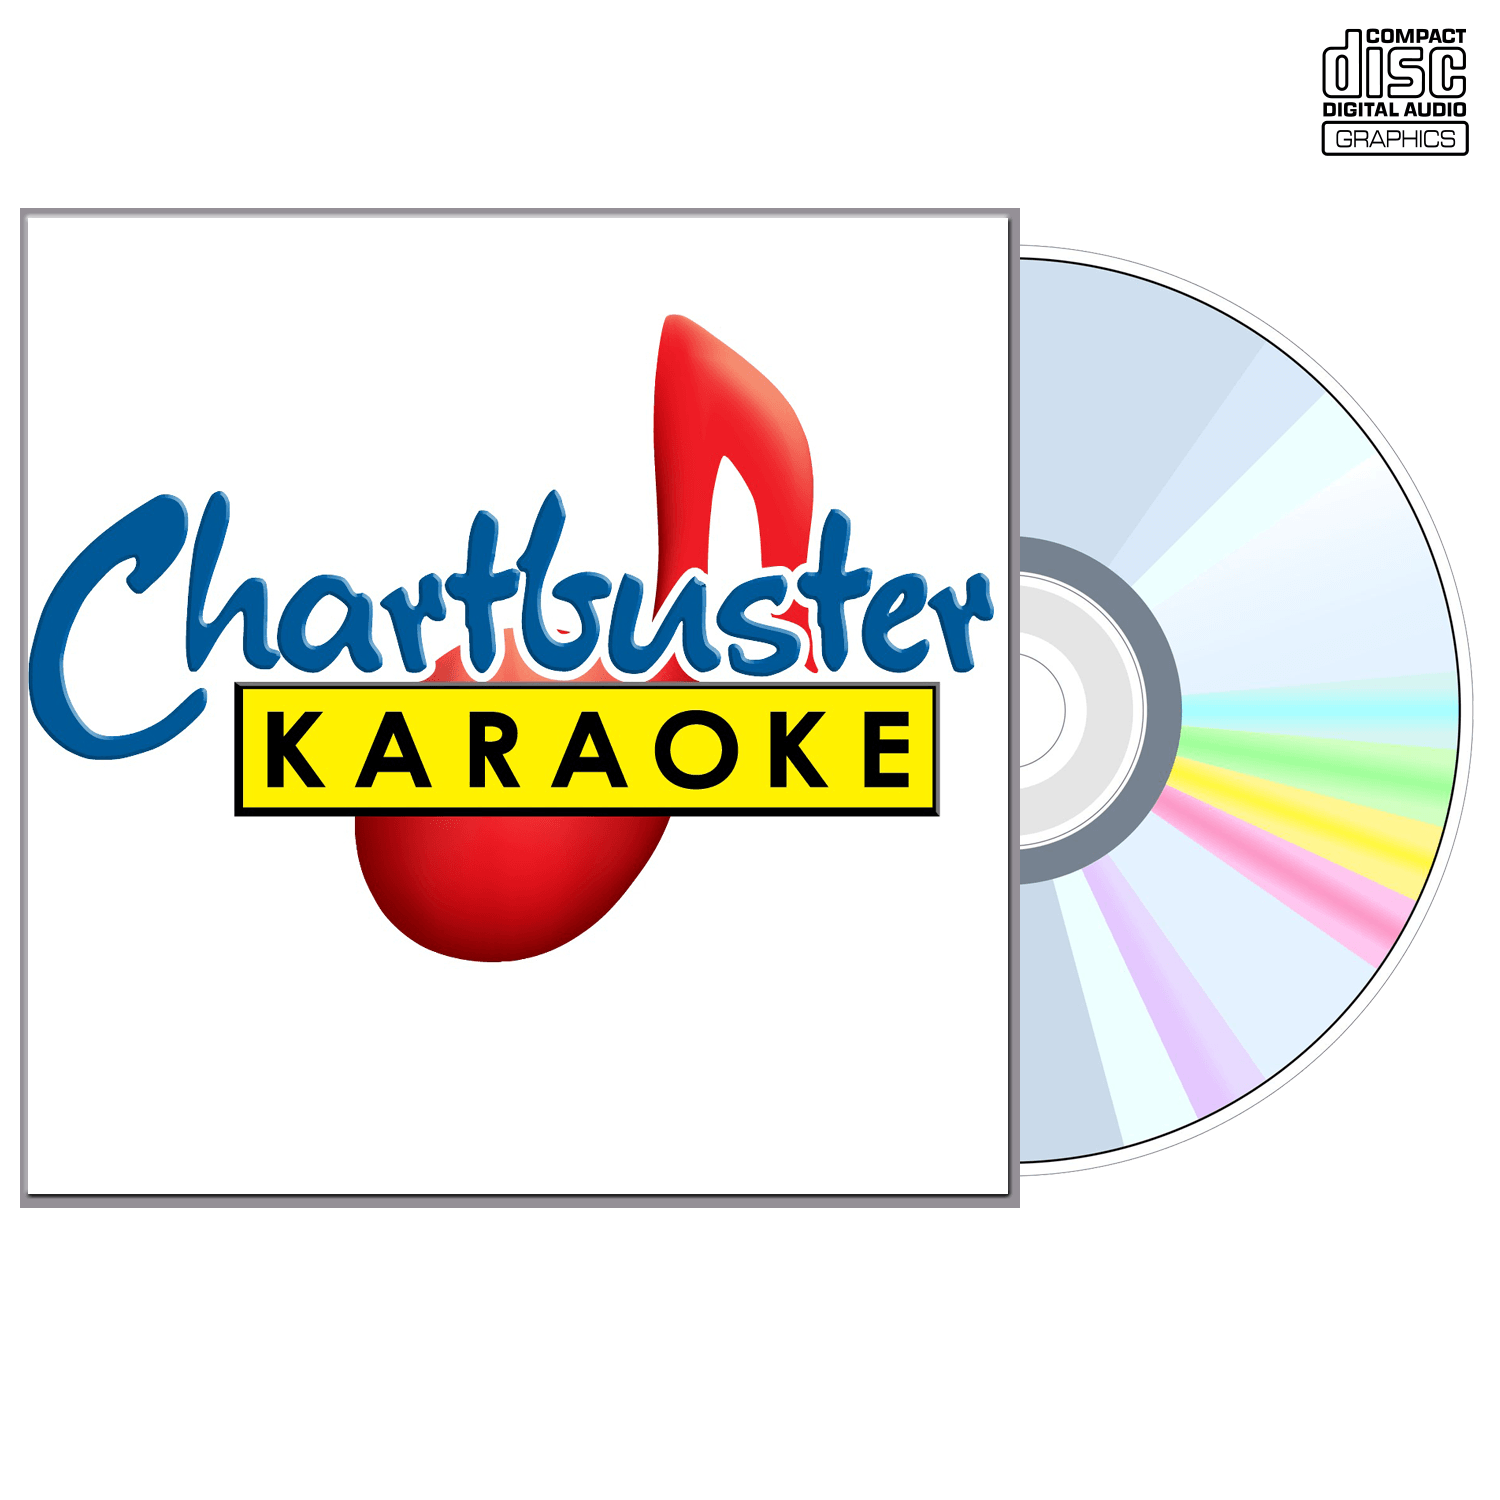 Adam Lambert - CD+G - Chartbuster Karaoke - Karaoke Home Entertainment